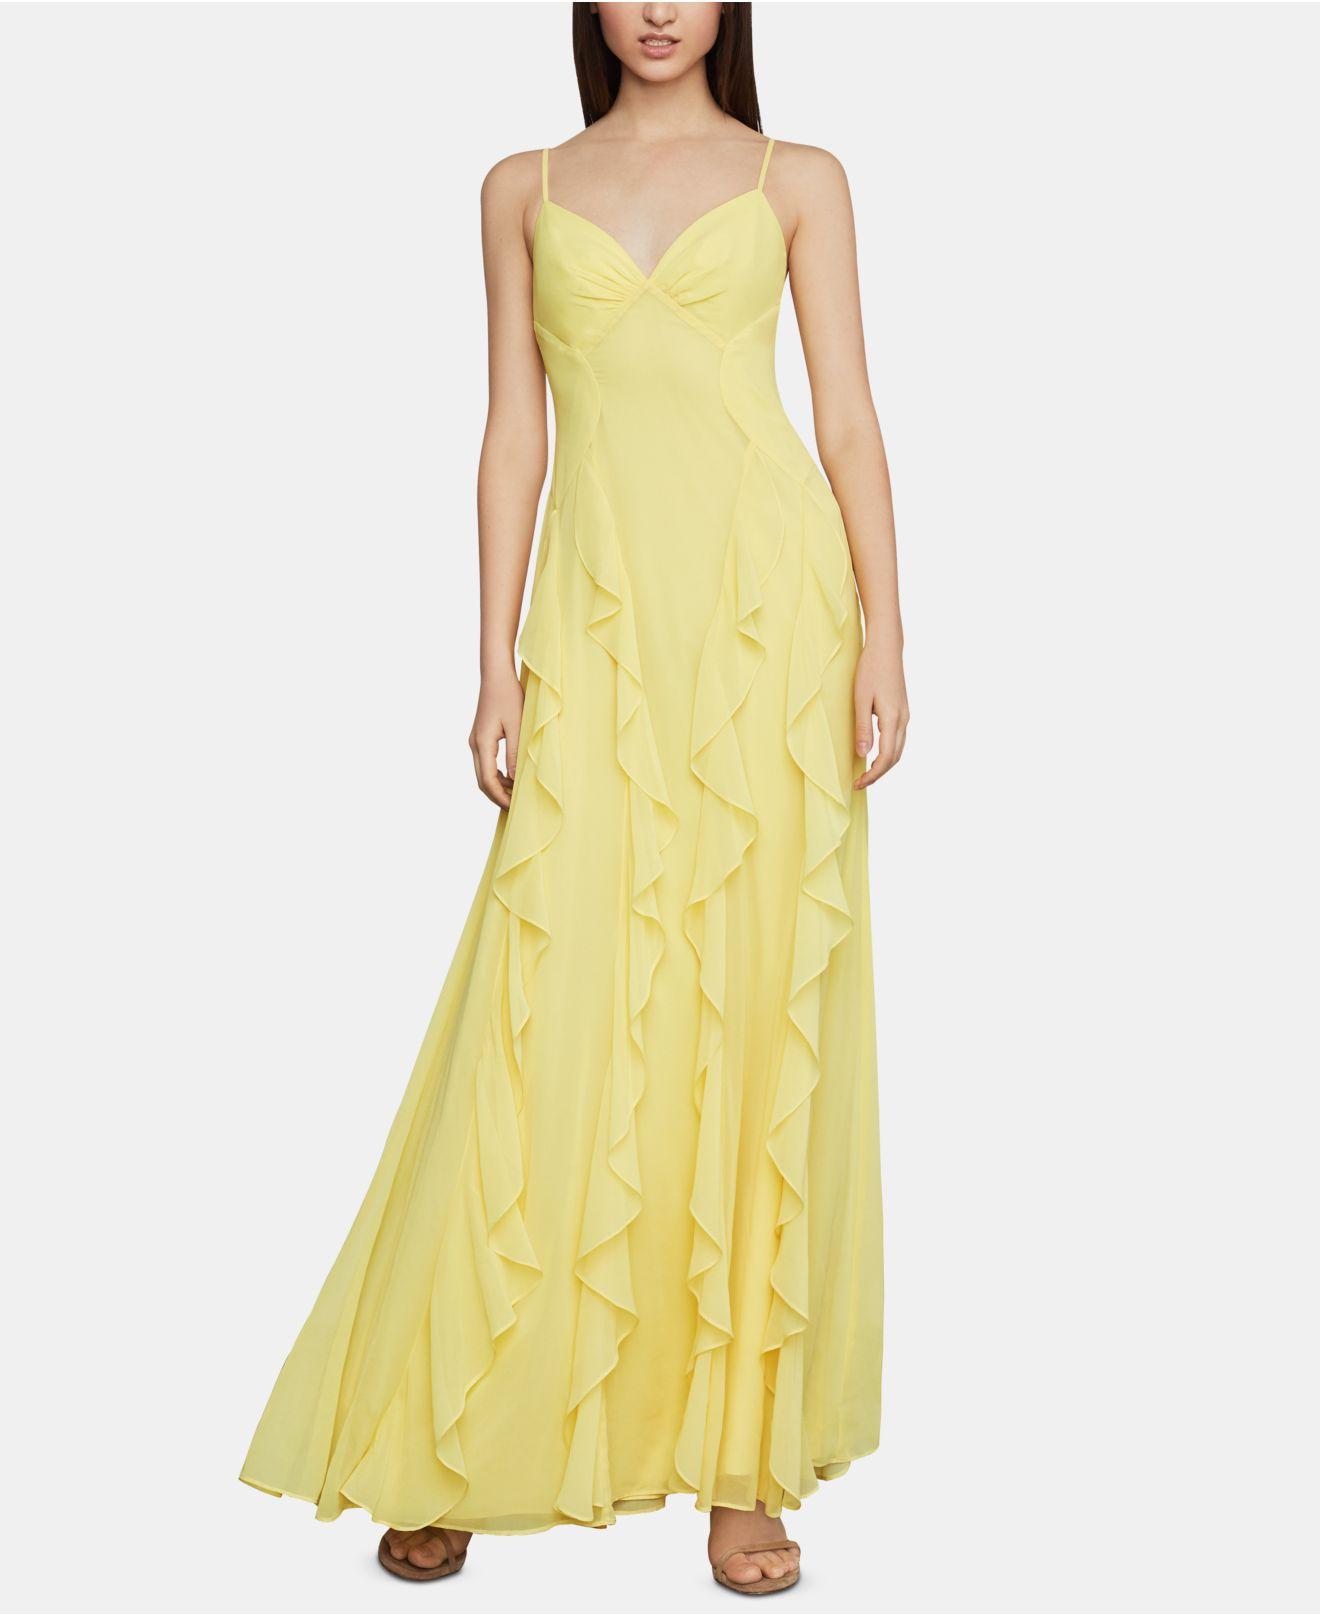 bcbg yellow gown